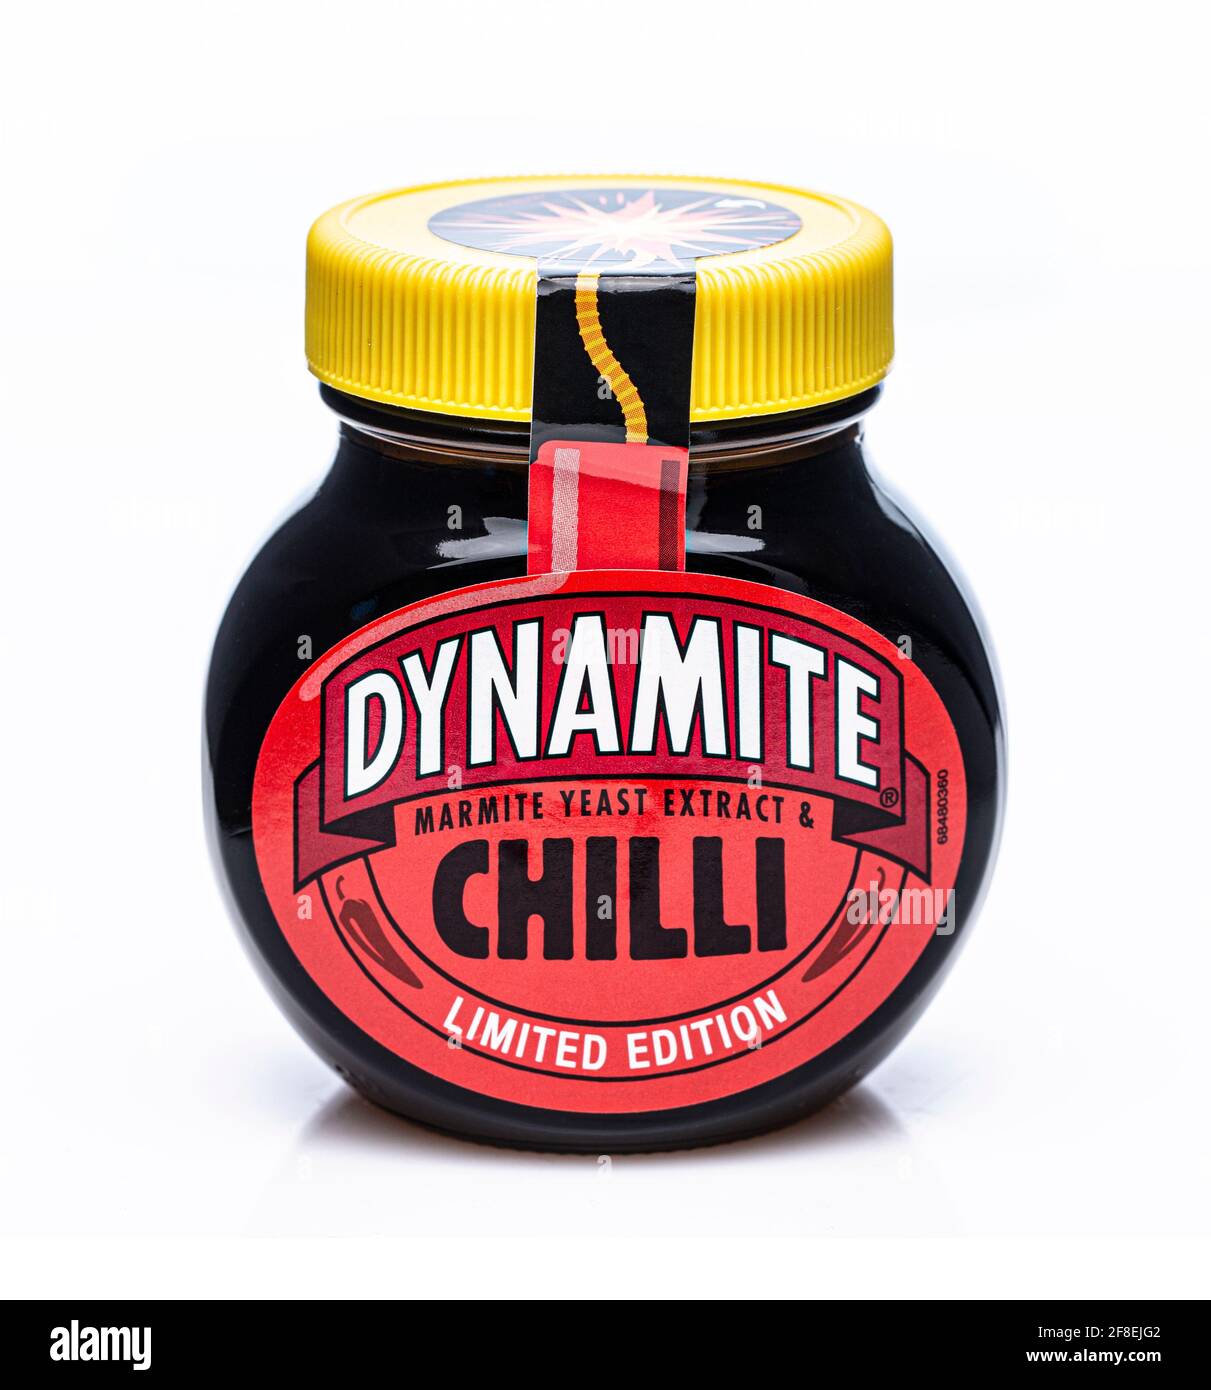 SWINDON, UK - APRIL 14, 2021: Jar of Dynamite Chilli Marmite Limited Edition on a white background Stock Photo